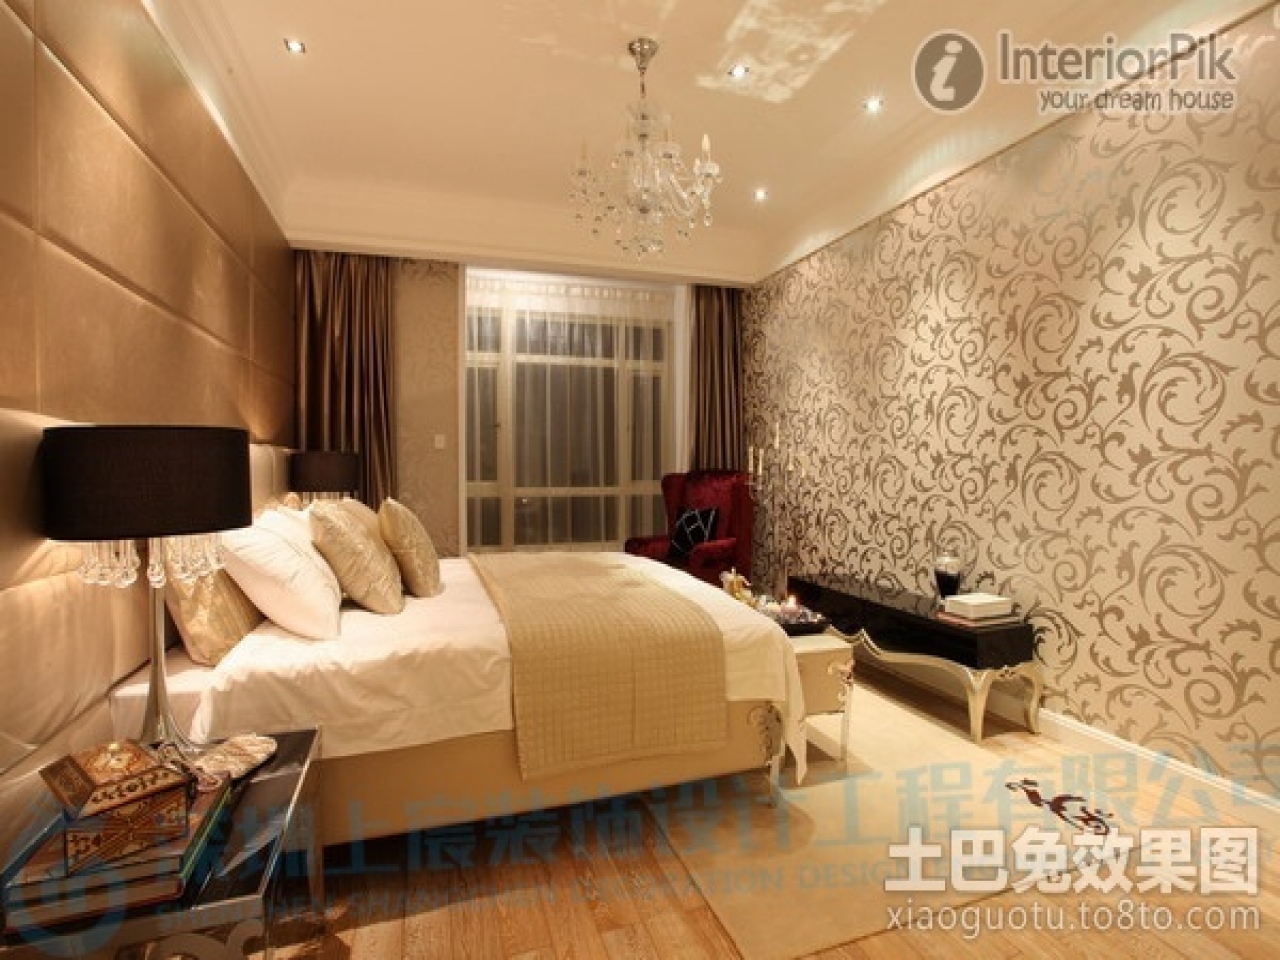 wallpaper for bedroom walls india,room,interior design,property,furniture,bedroom